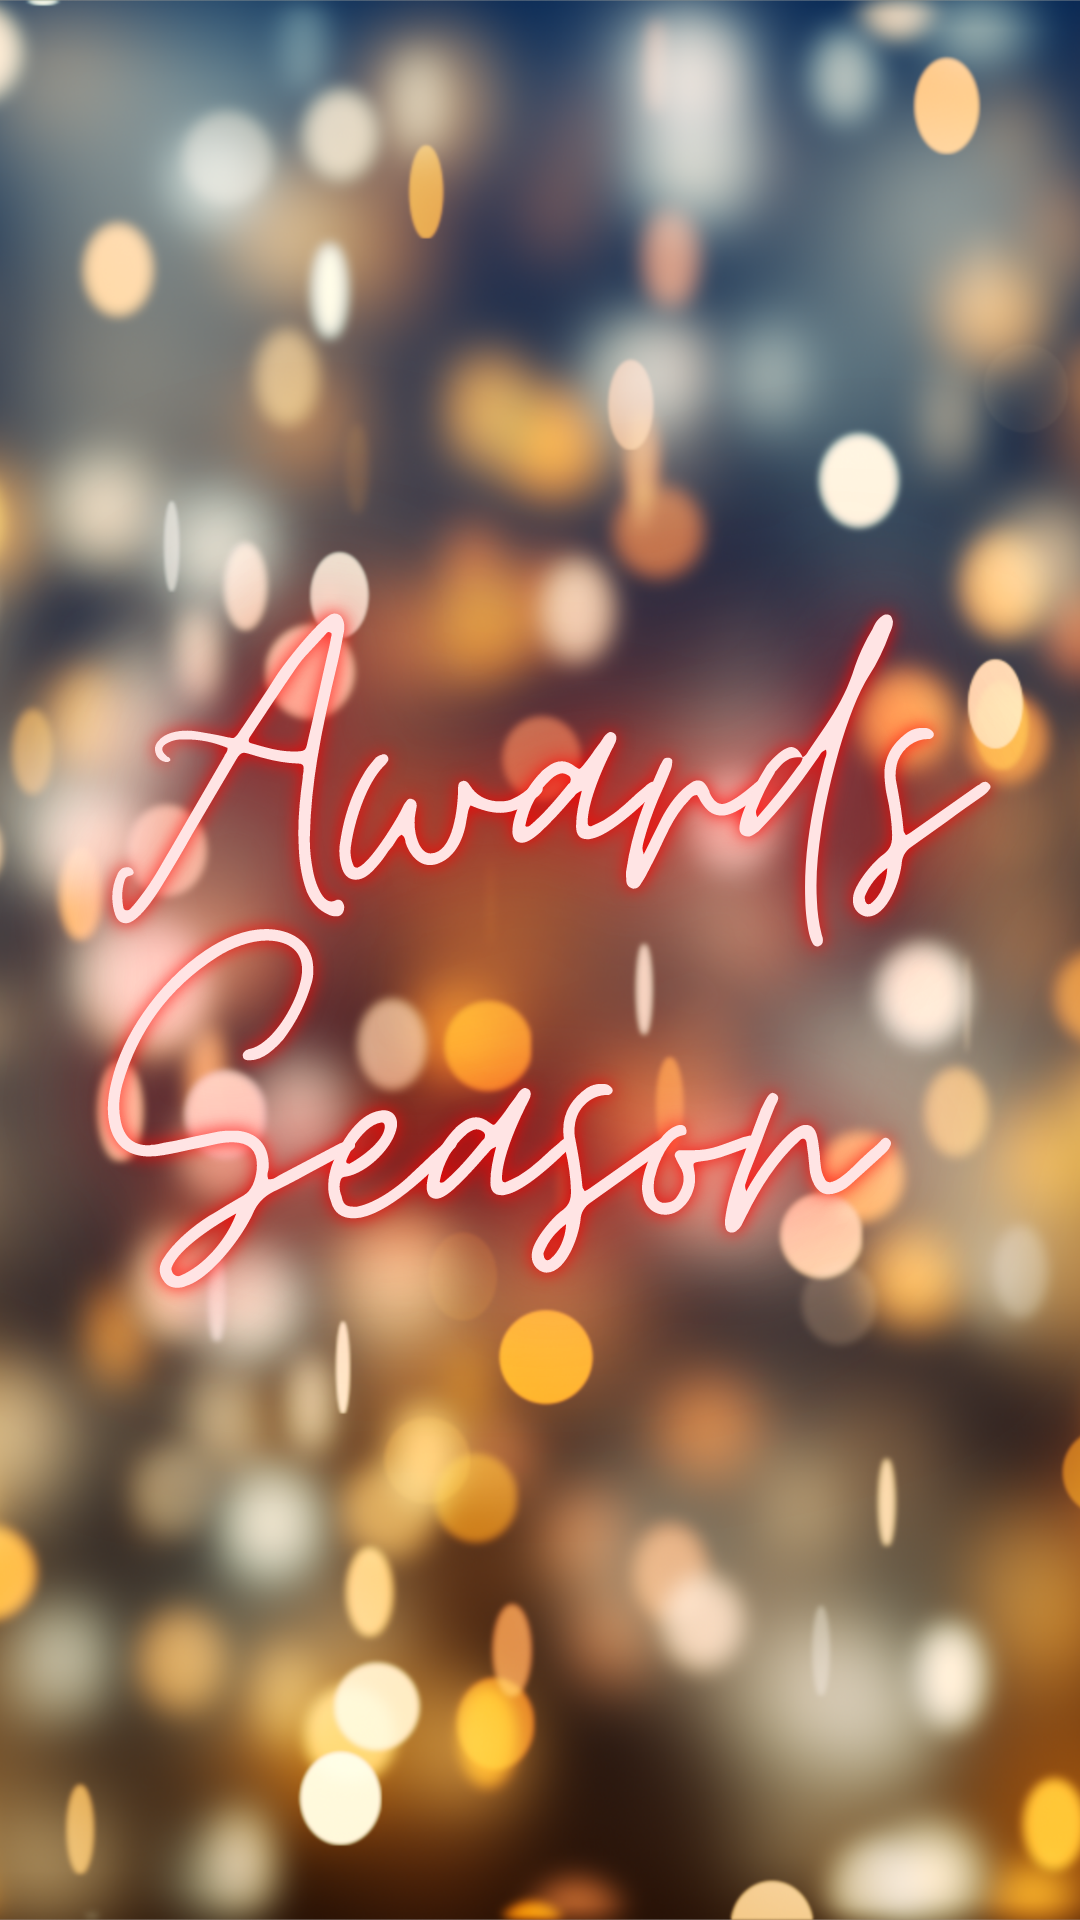 Awards Season